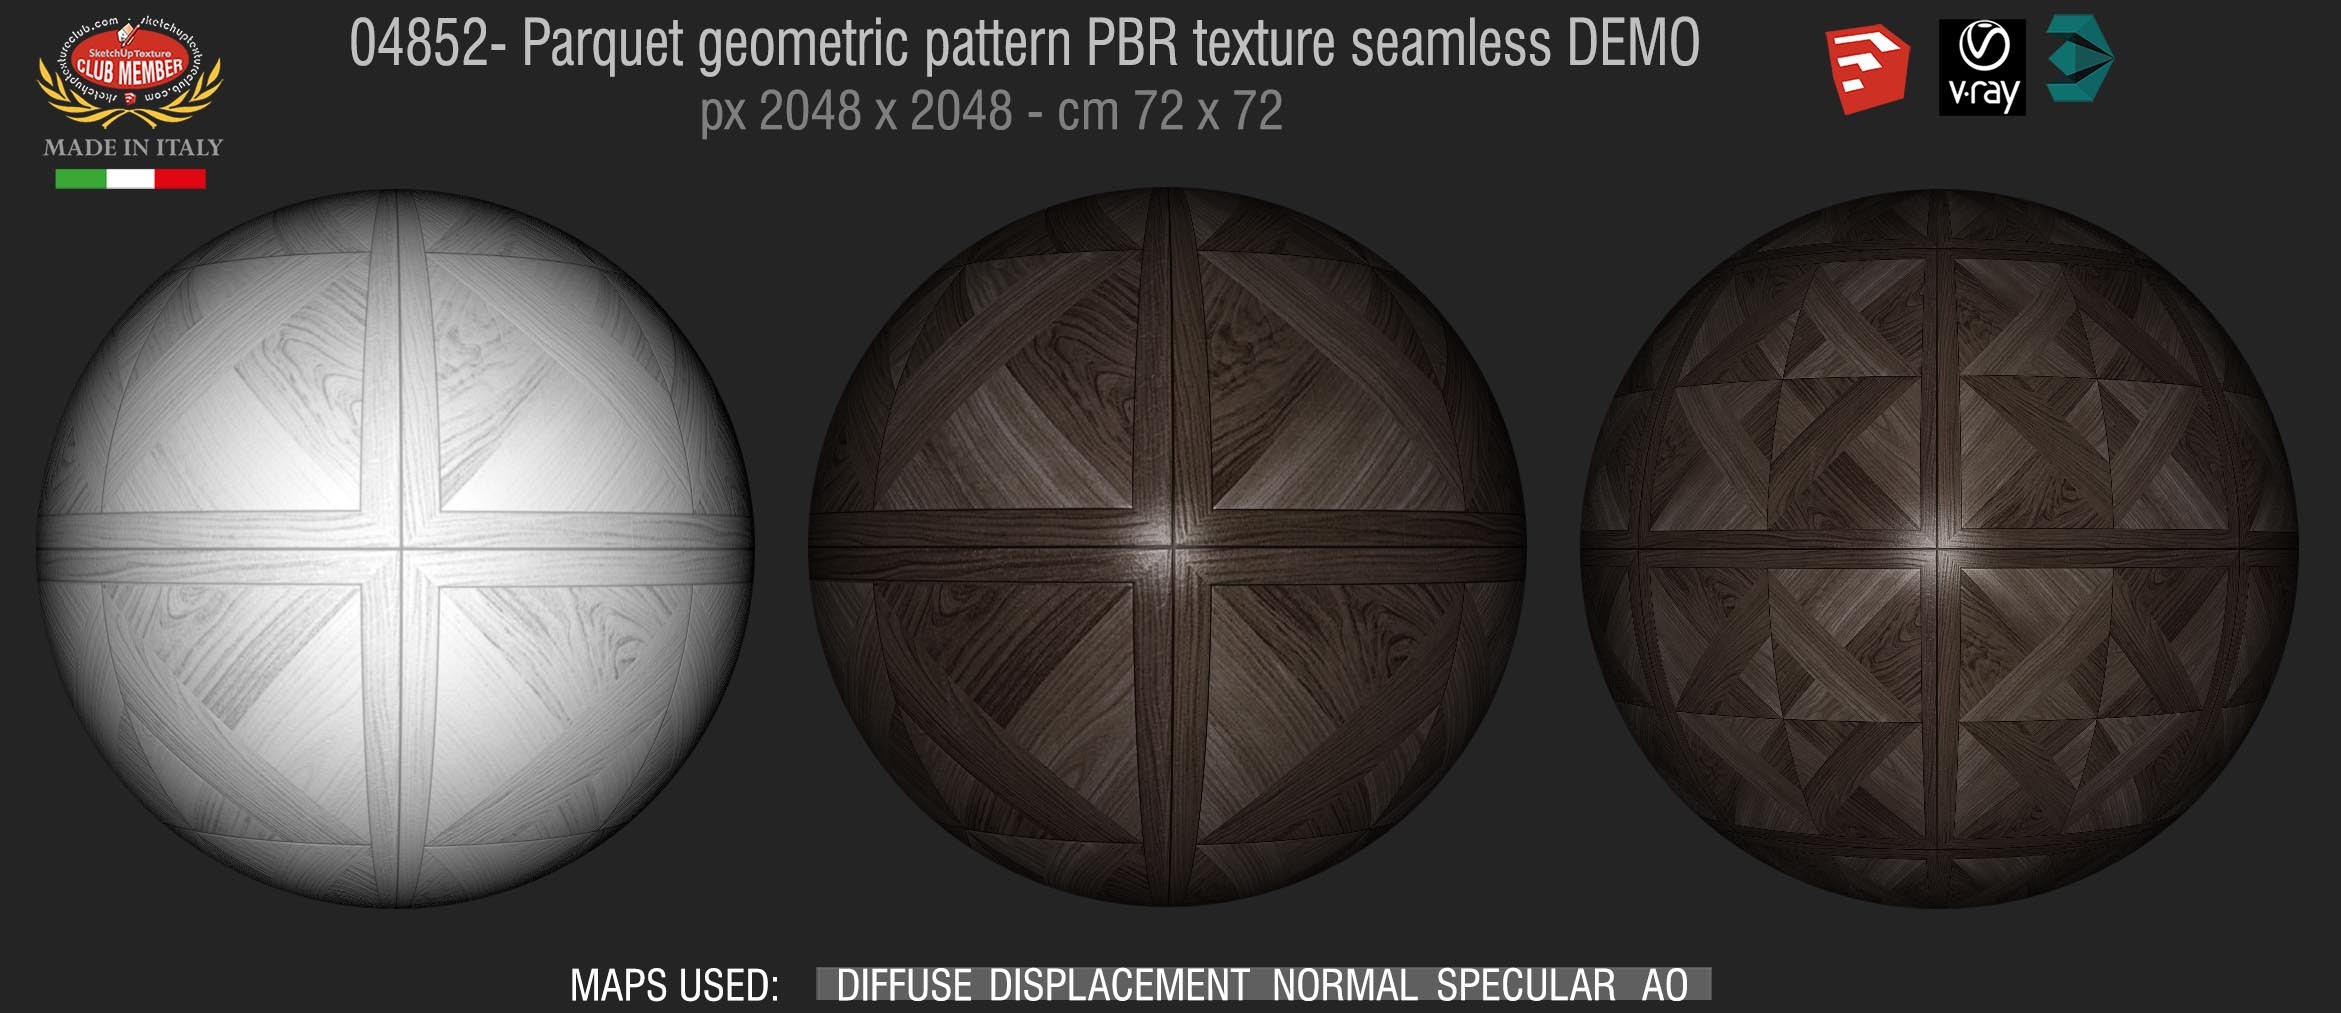 04852 Parquet geometric pattern PBR texture seamless DEMO